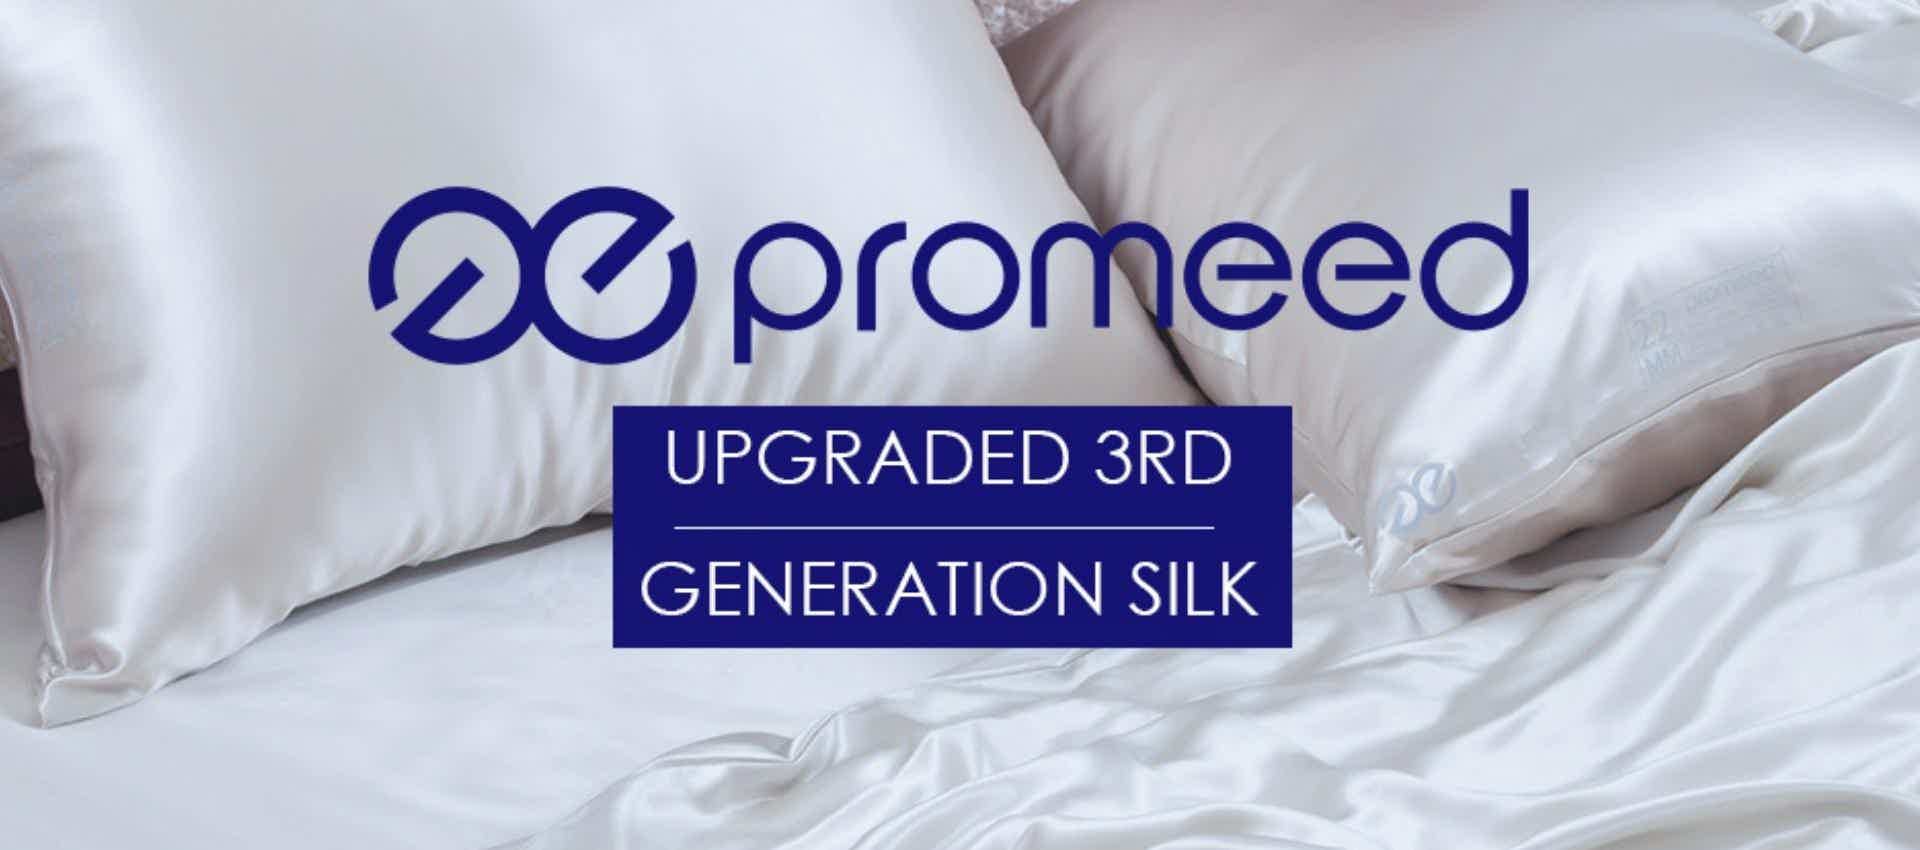 promeed 3rd generation silk